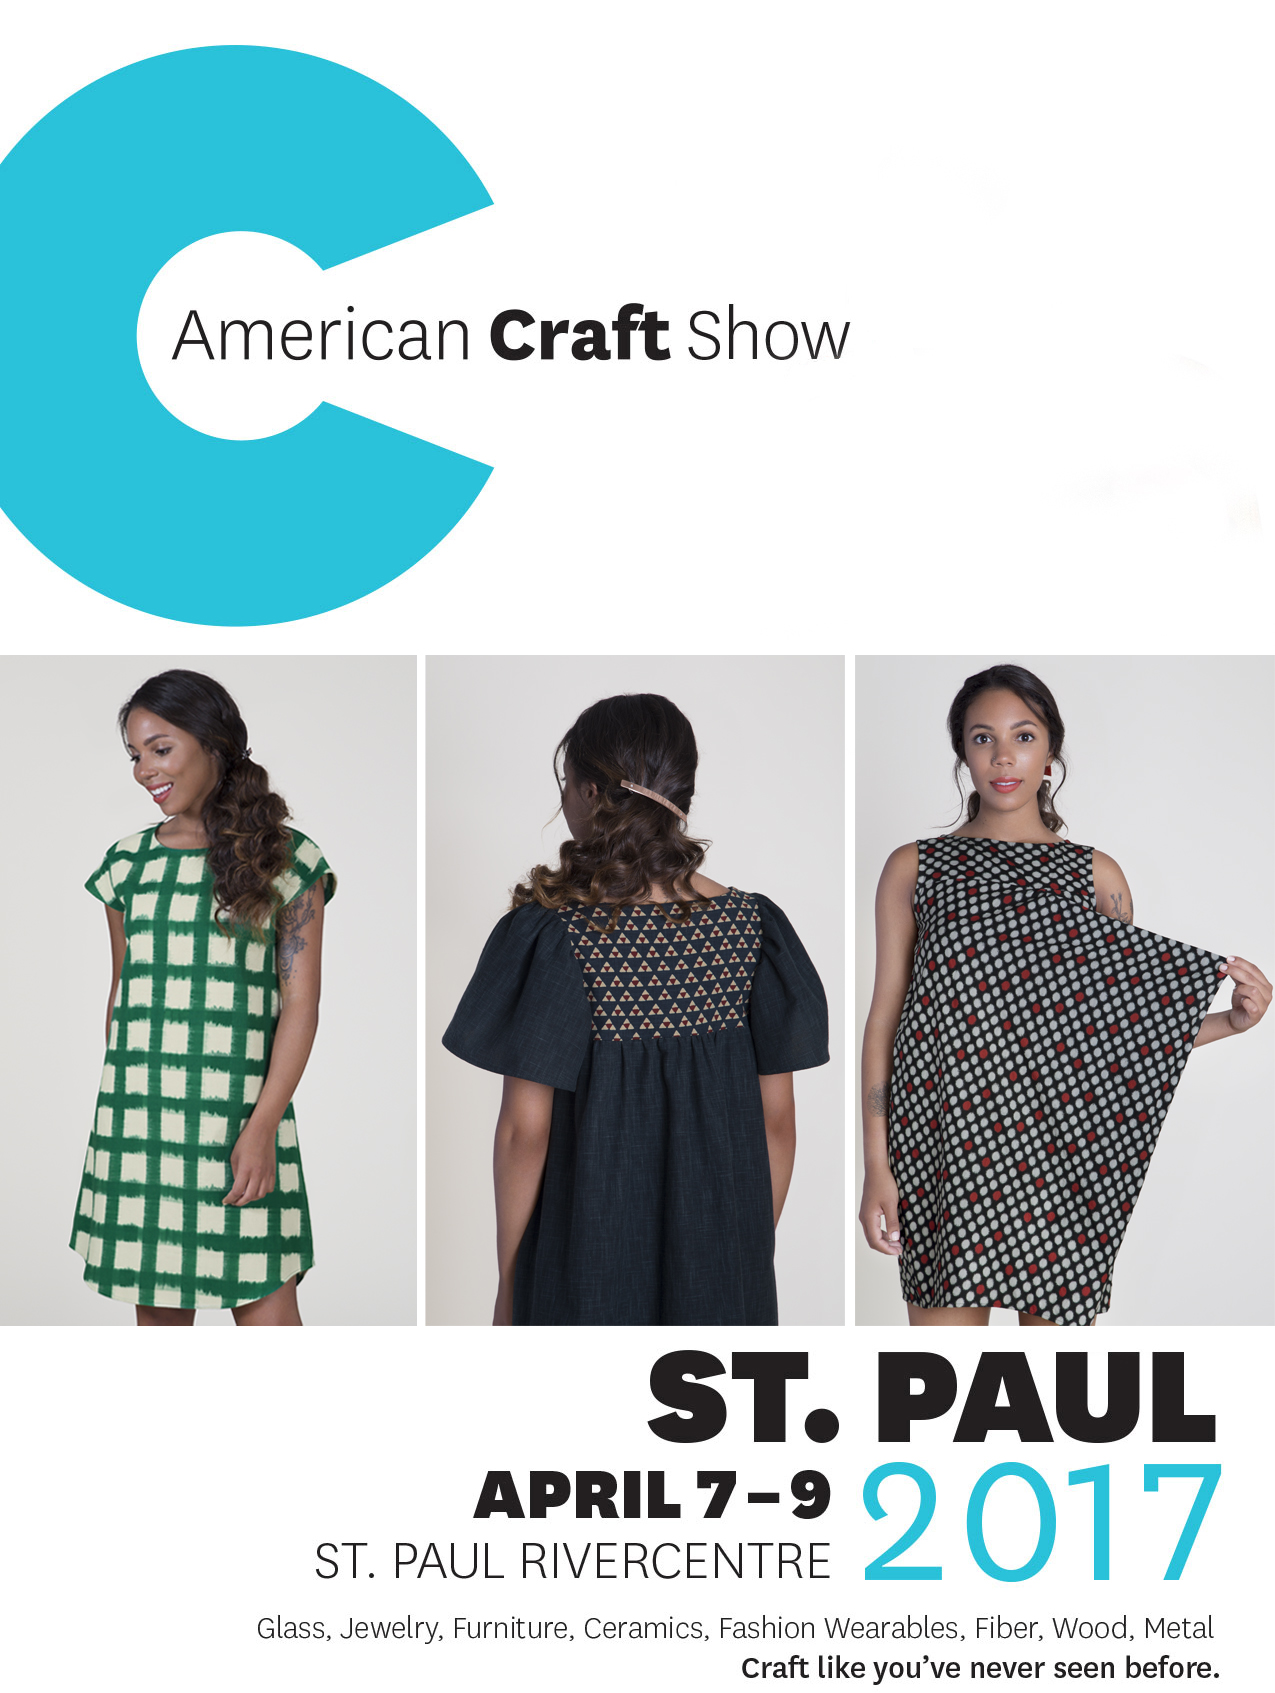 Jamie Lau Designs American Craft Show St. Paul